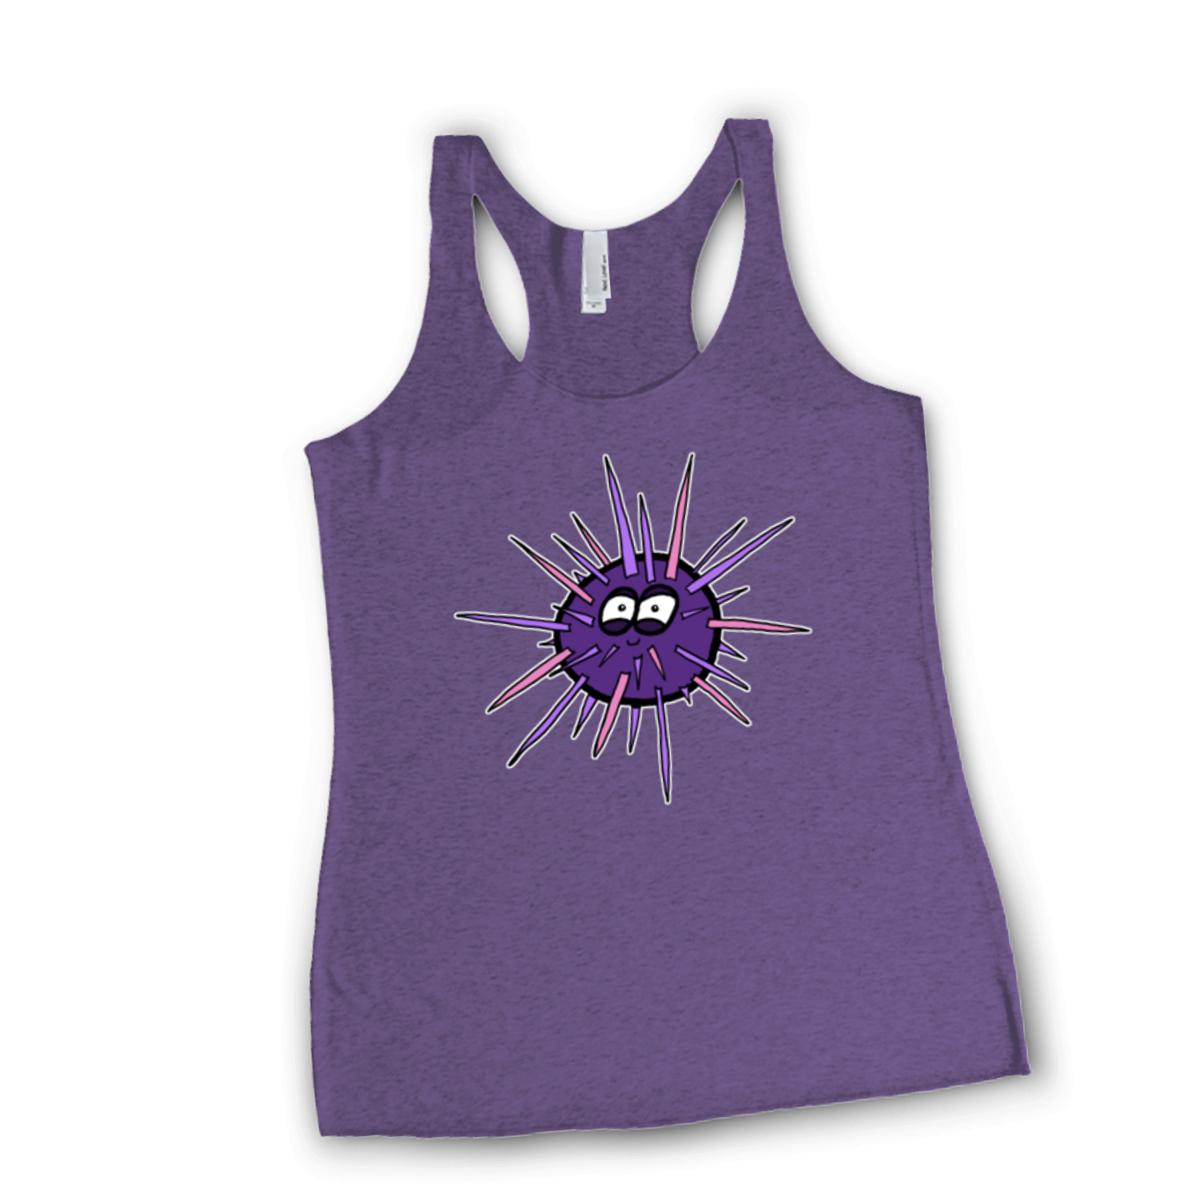 Sea Urchin Ladies' Racerback Tank Small purple-rush